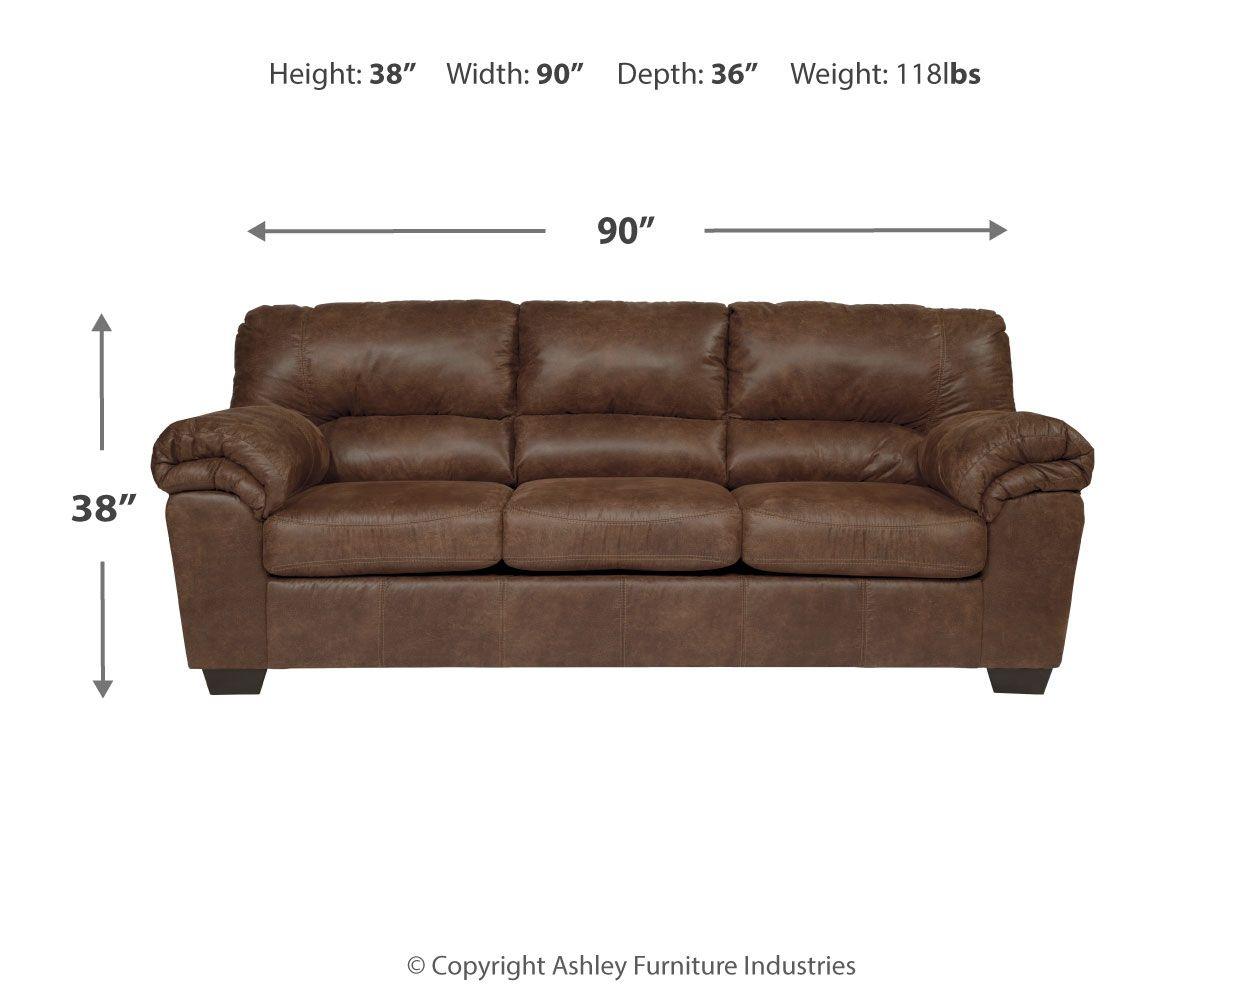 Signature Design by Ashley® - Bladen - Stationary Sofa - 5th Avenue Furniture